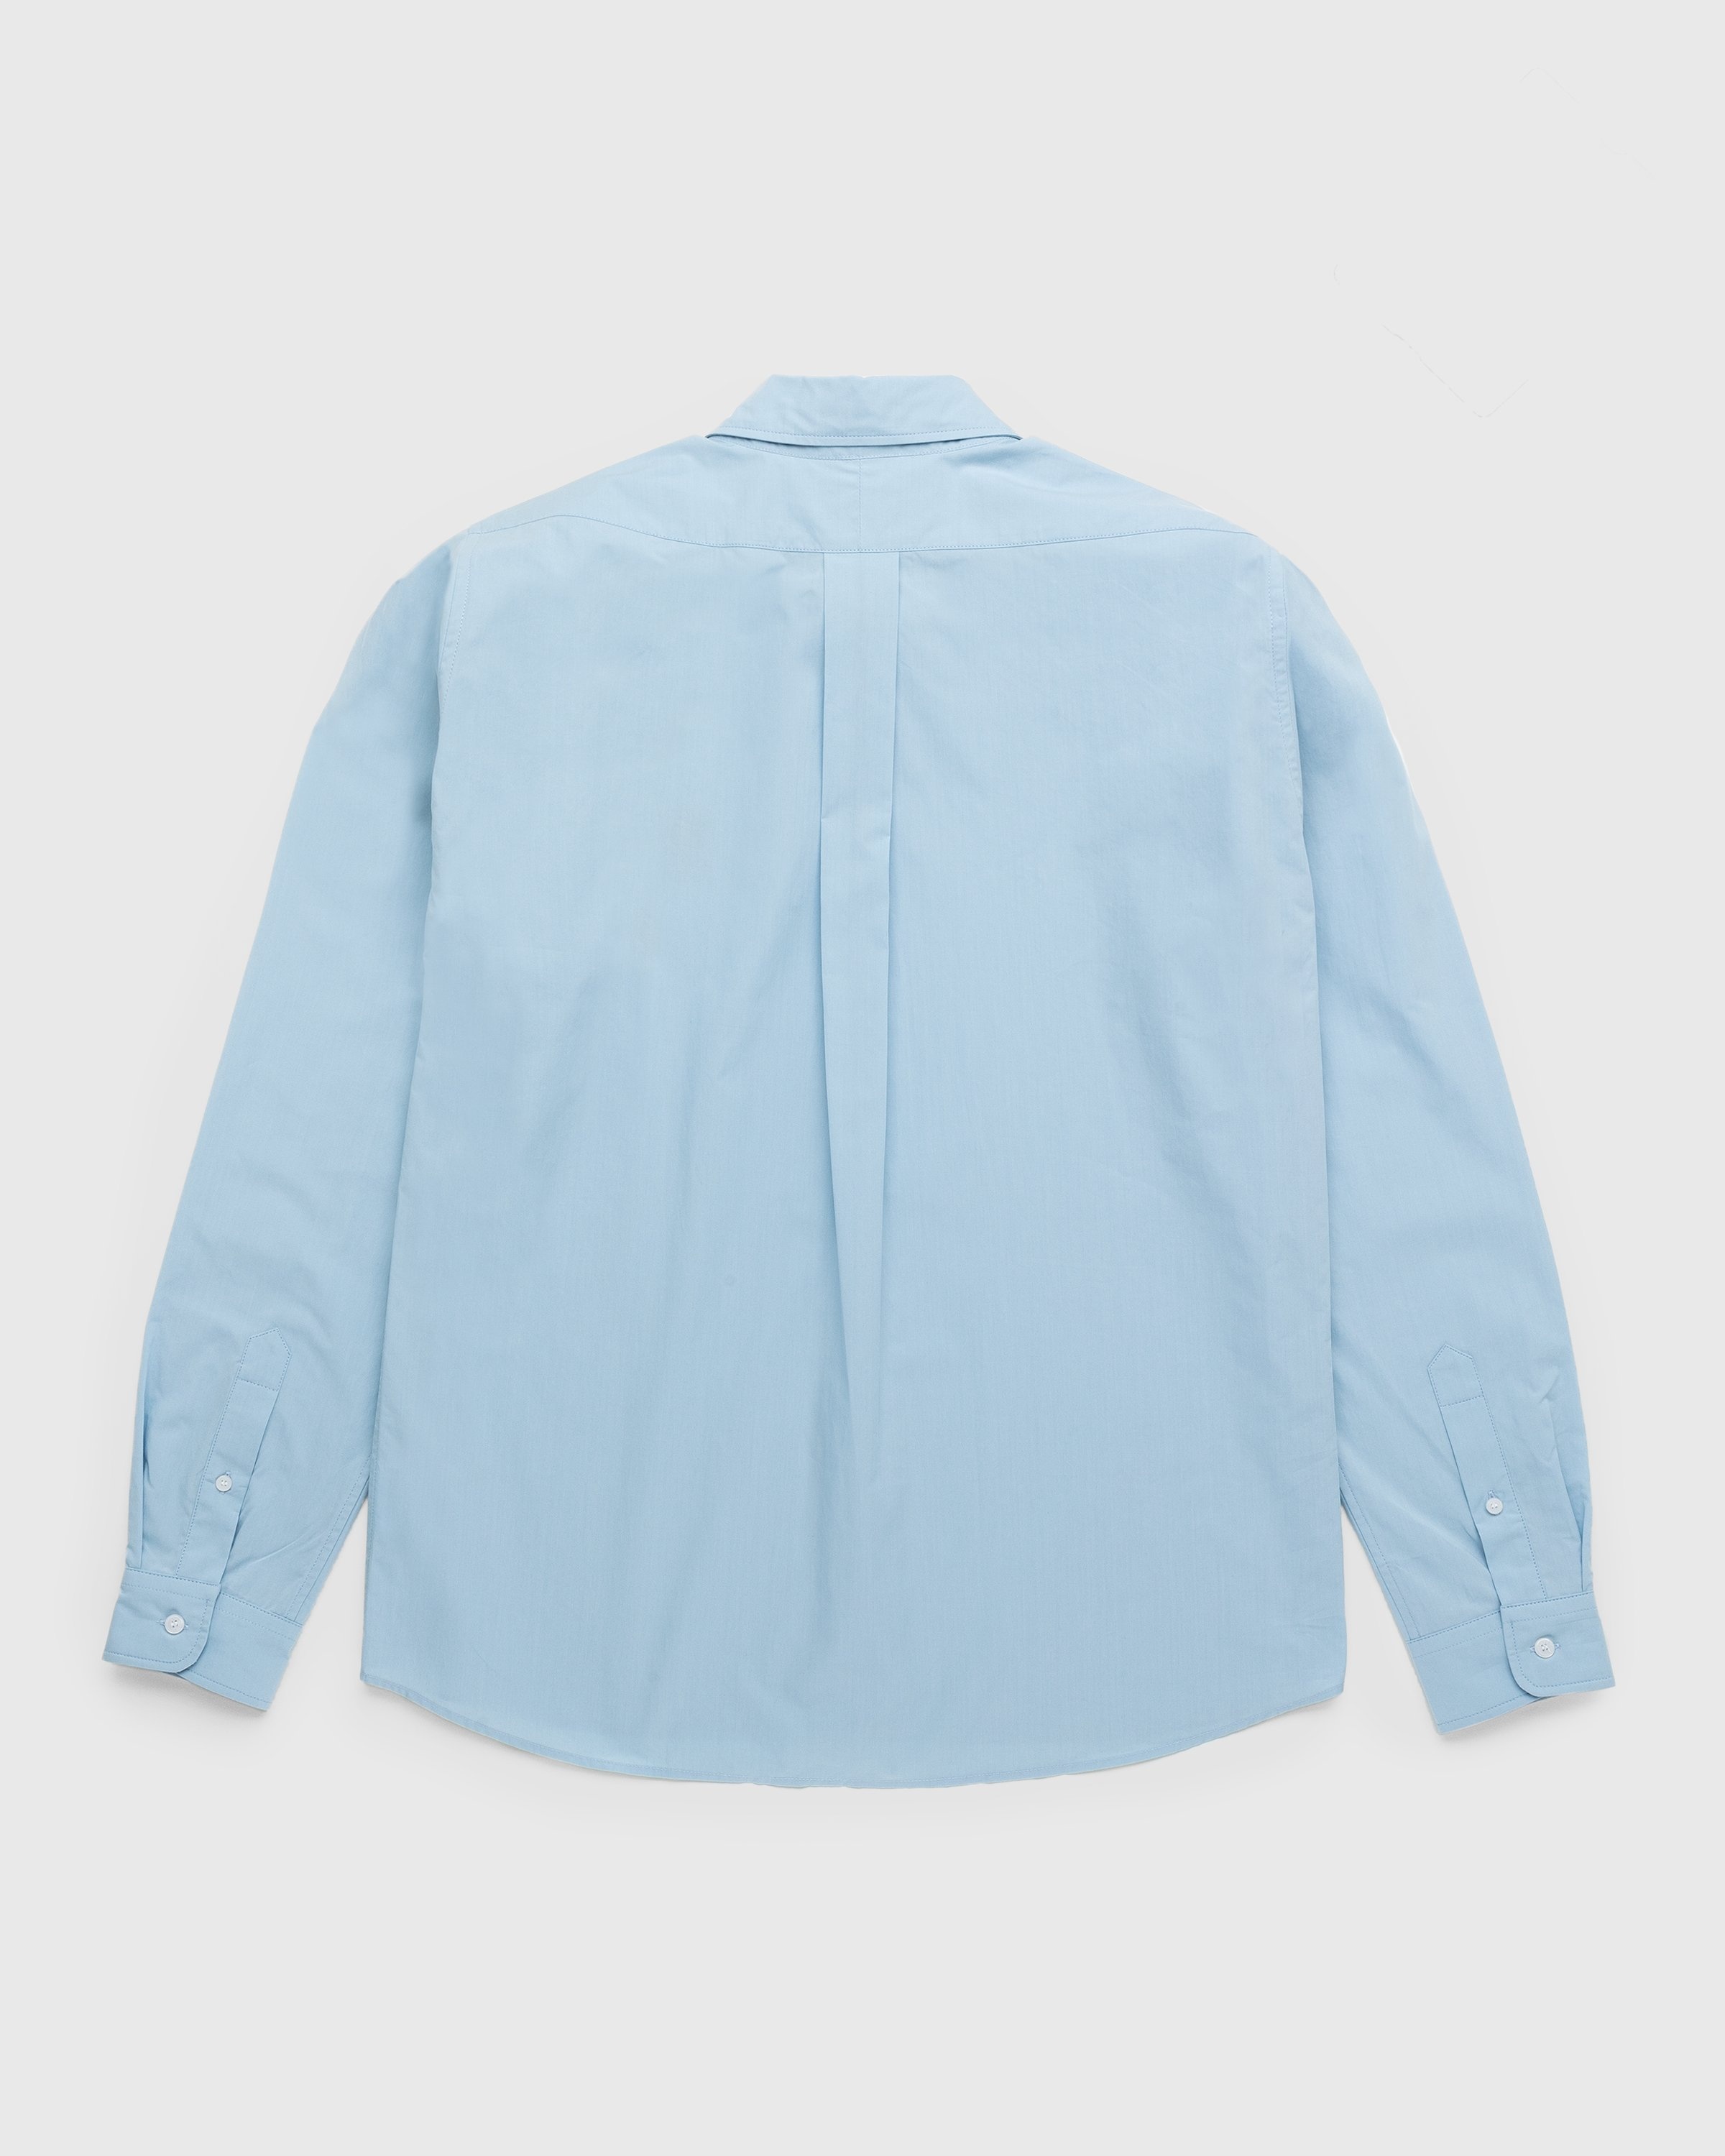 Kenzo – Shirt Sky Blue - Longsleeve Shirts - Blue - Image 2